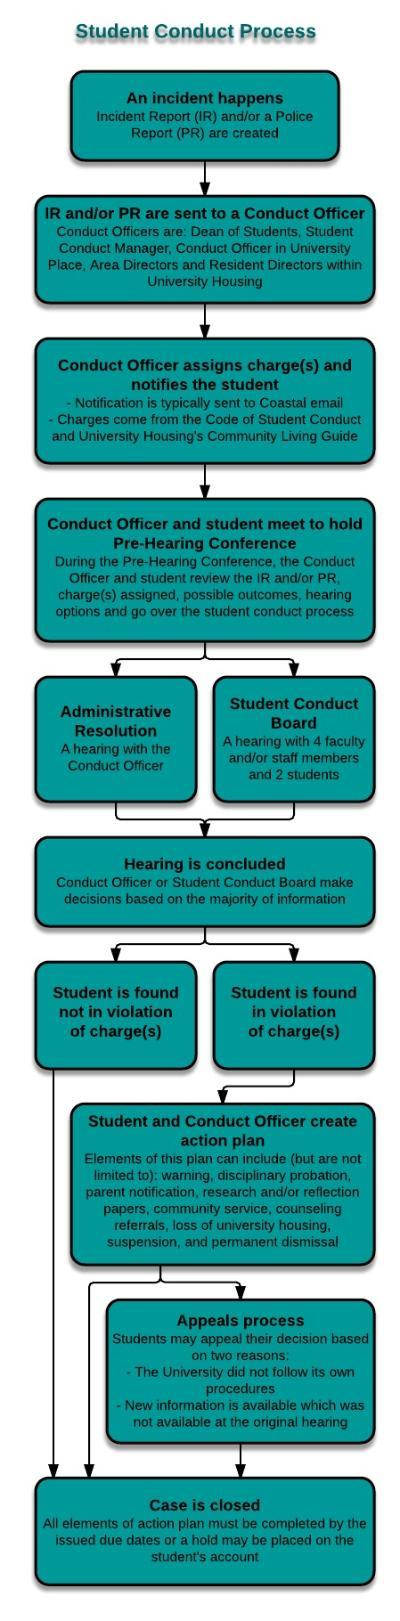 Student Conduct Process image